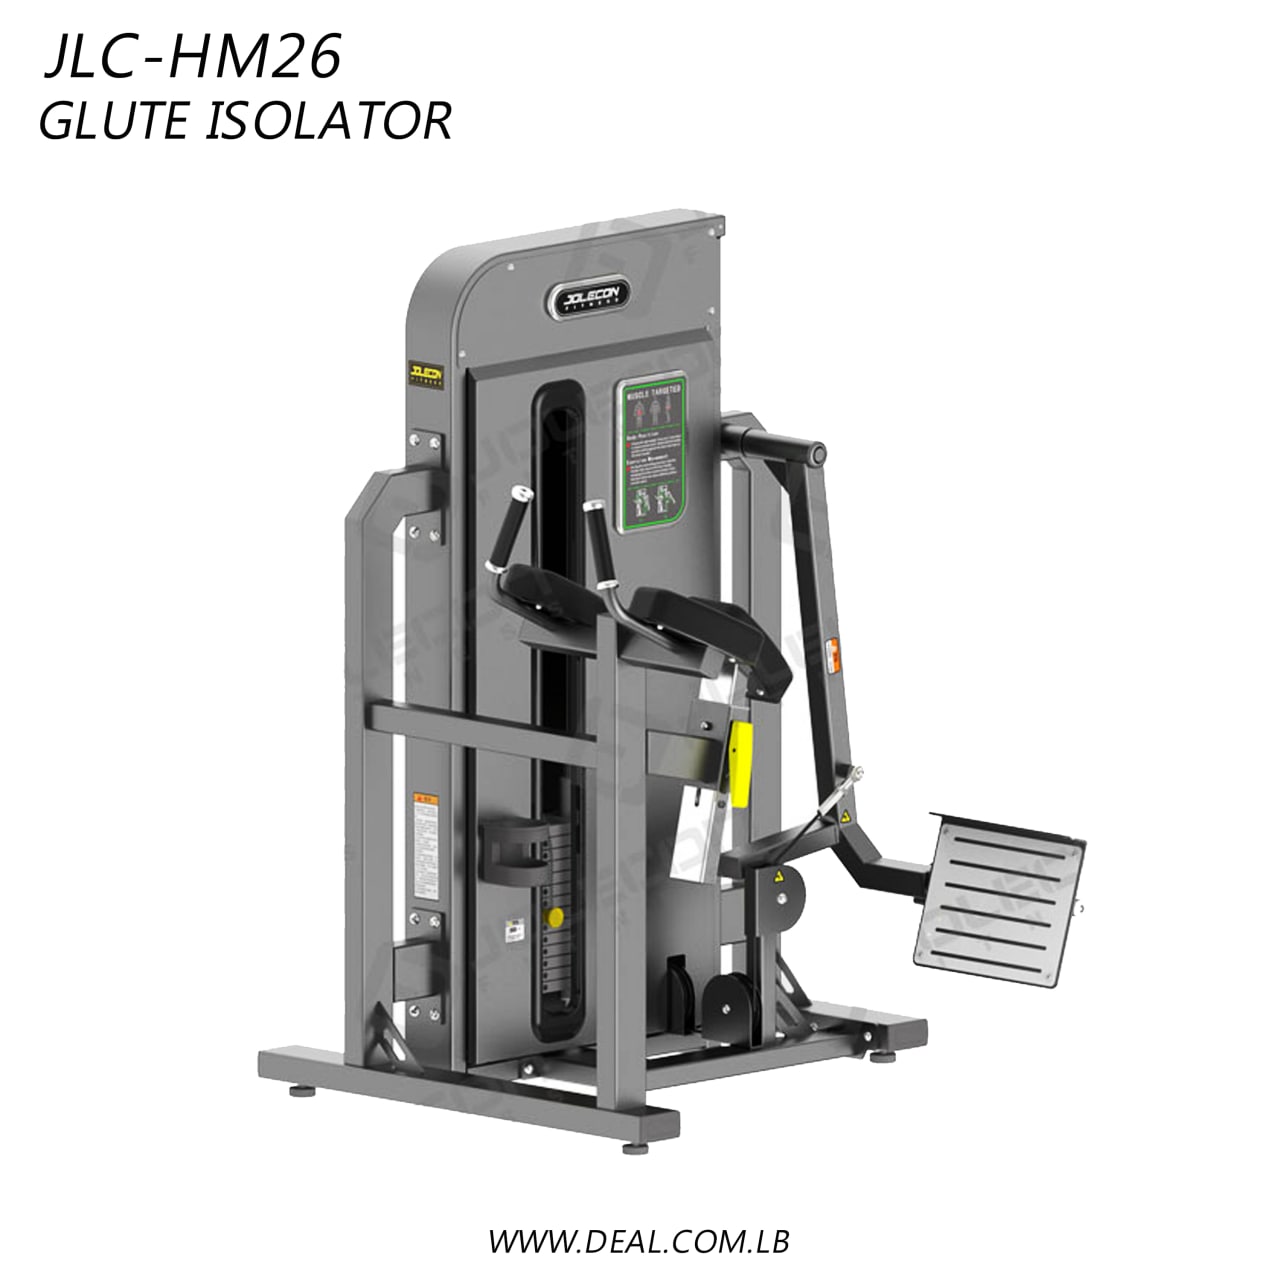 JLC-HM26 | Glute Isolator